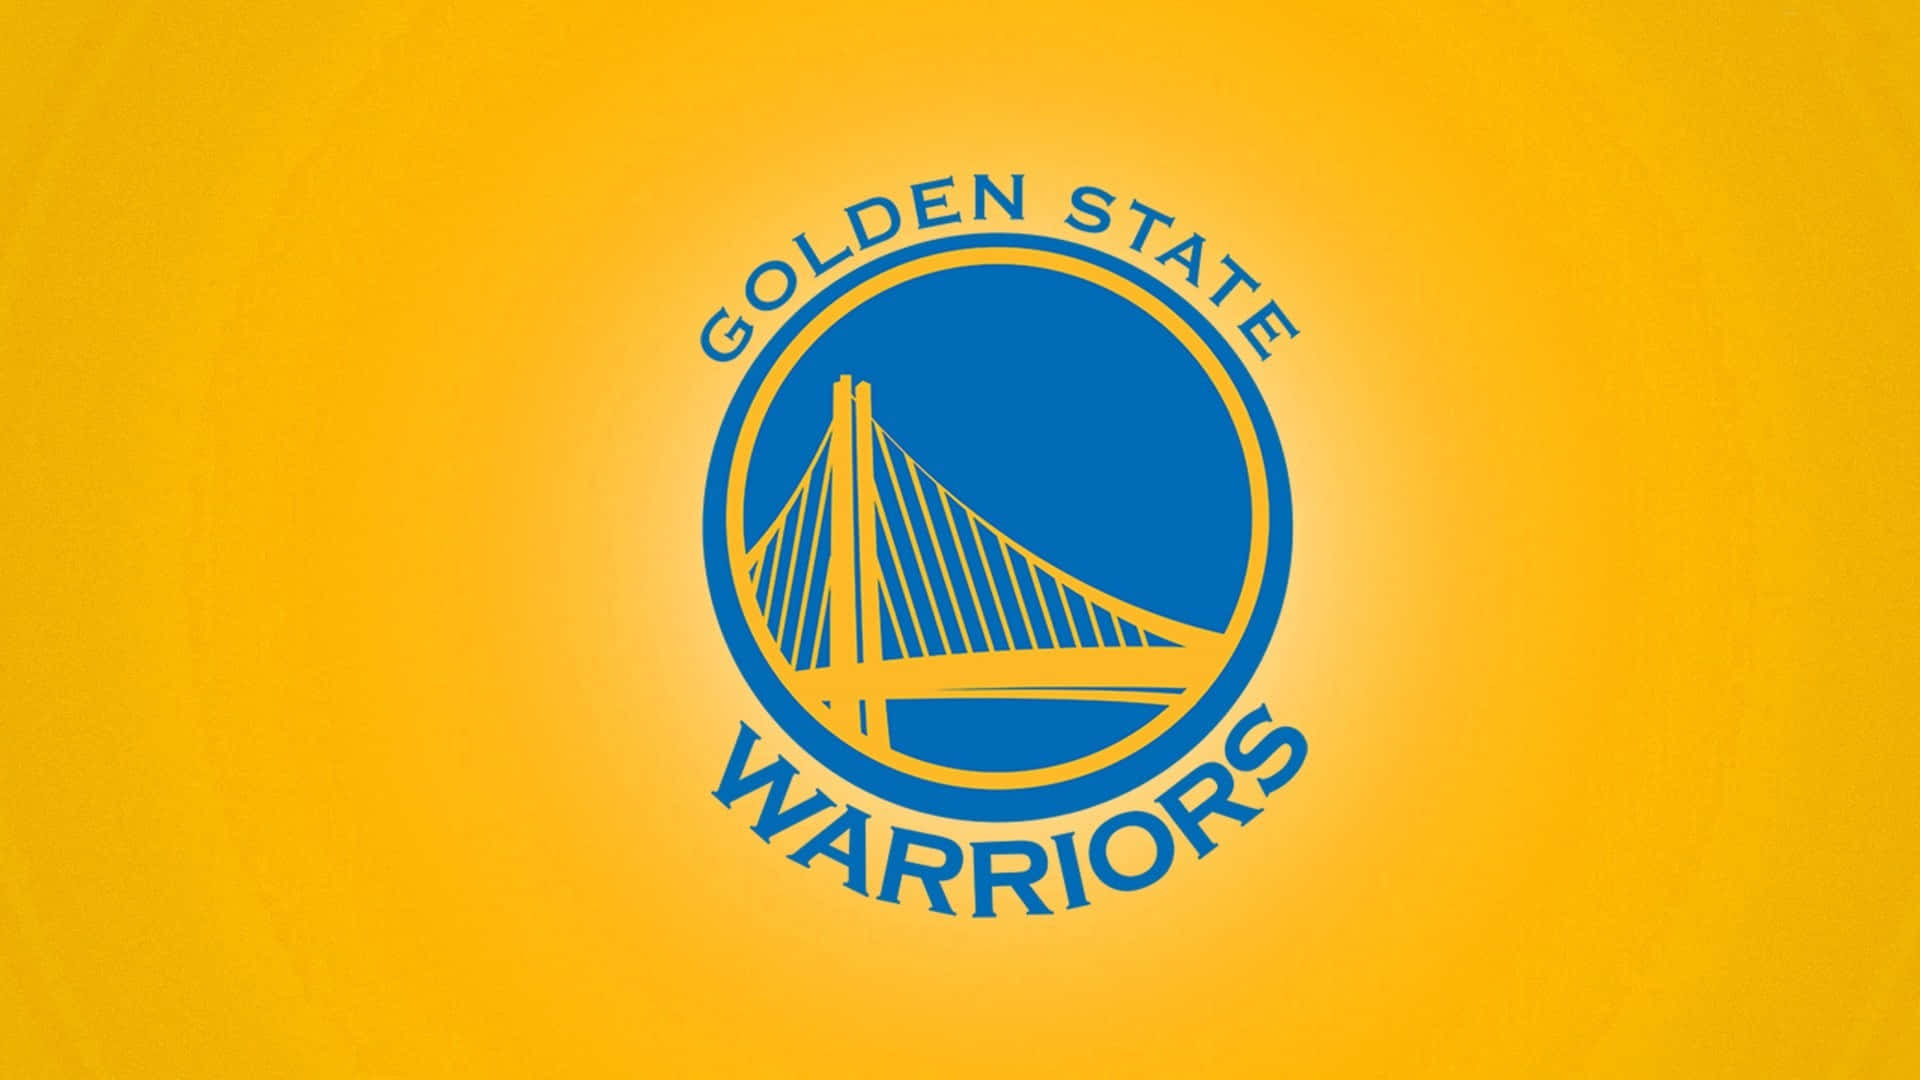 Vis din støtte for Golden State Warriors med deres officielle logo. Wallpaper